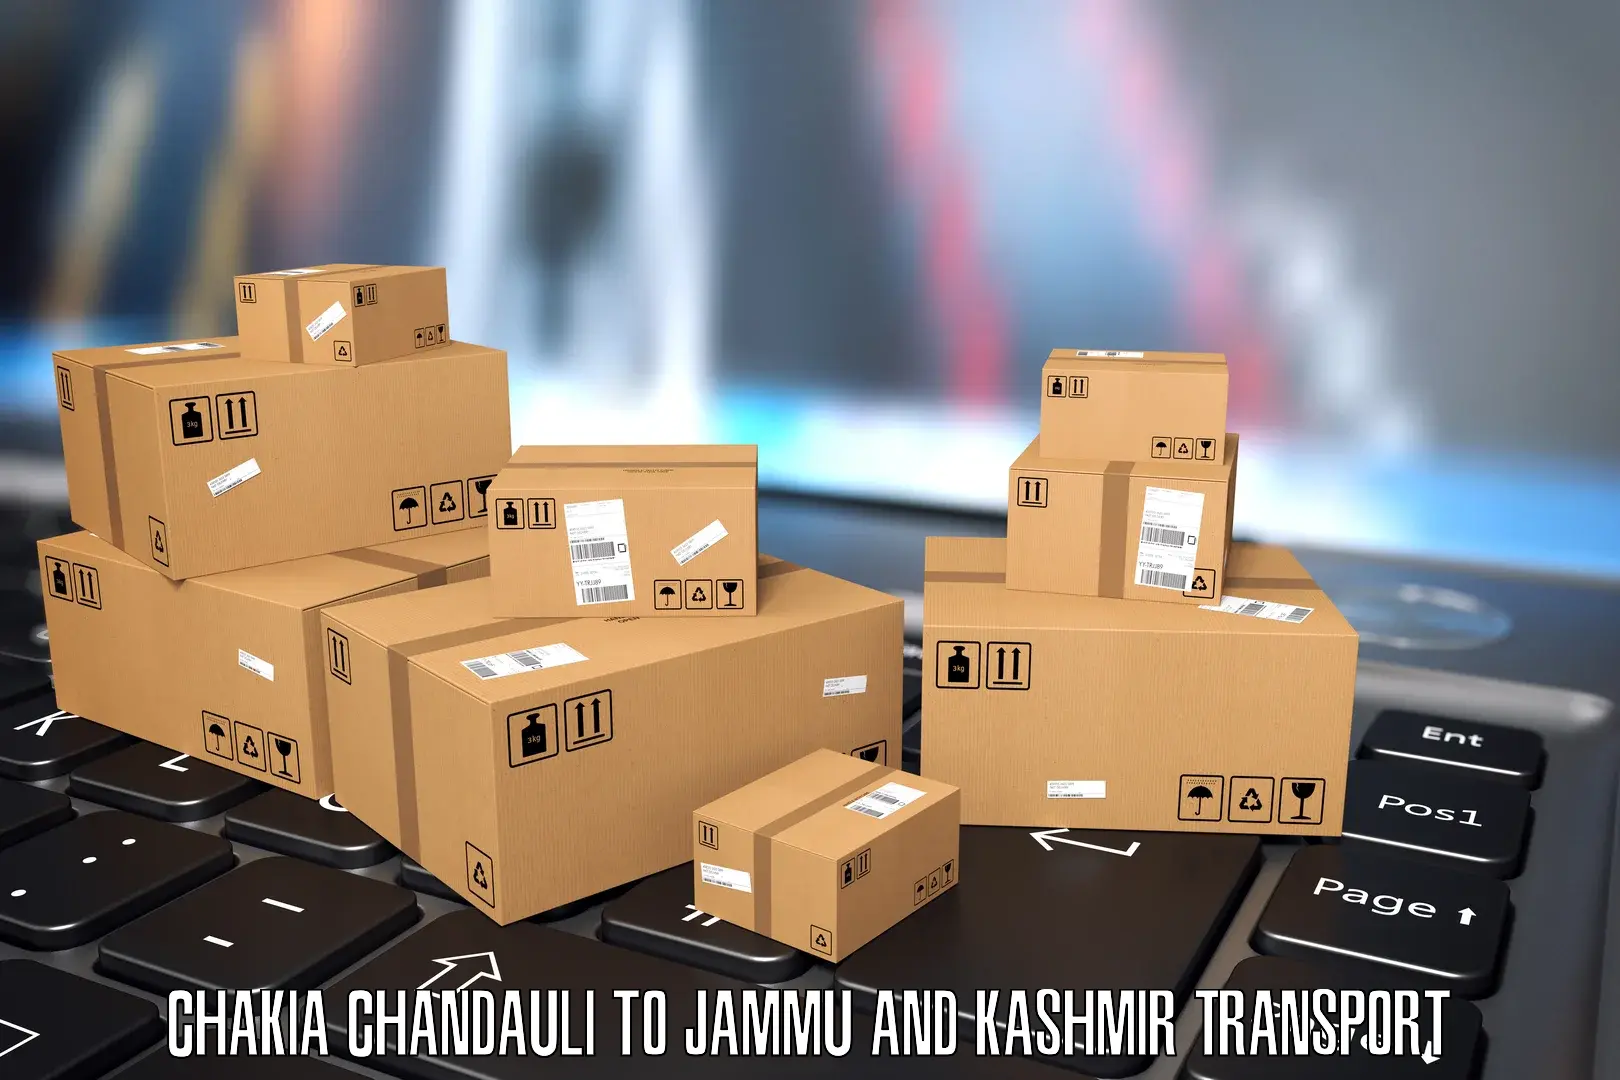 Furniture transport service Chakia Chandauli to Shopian